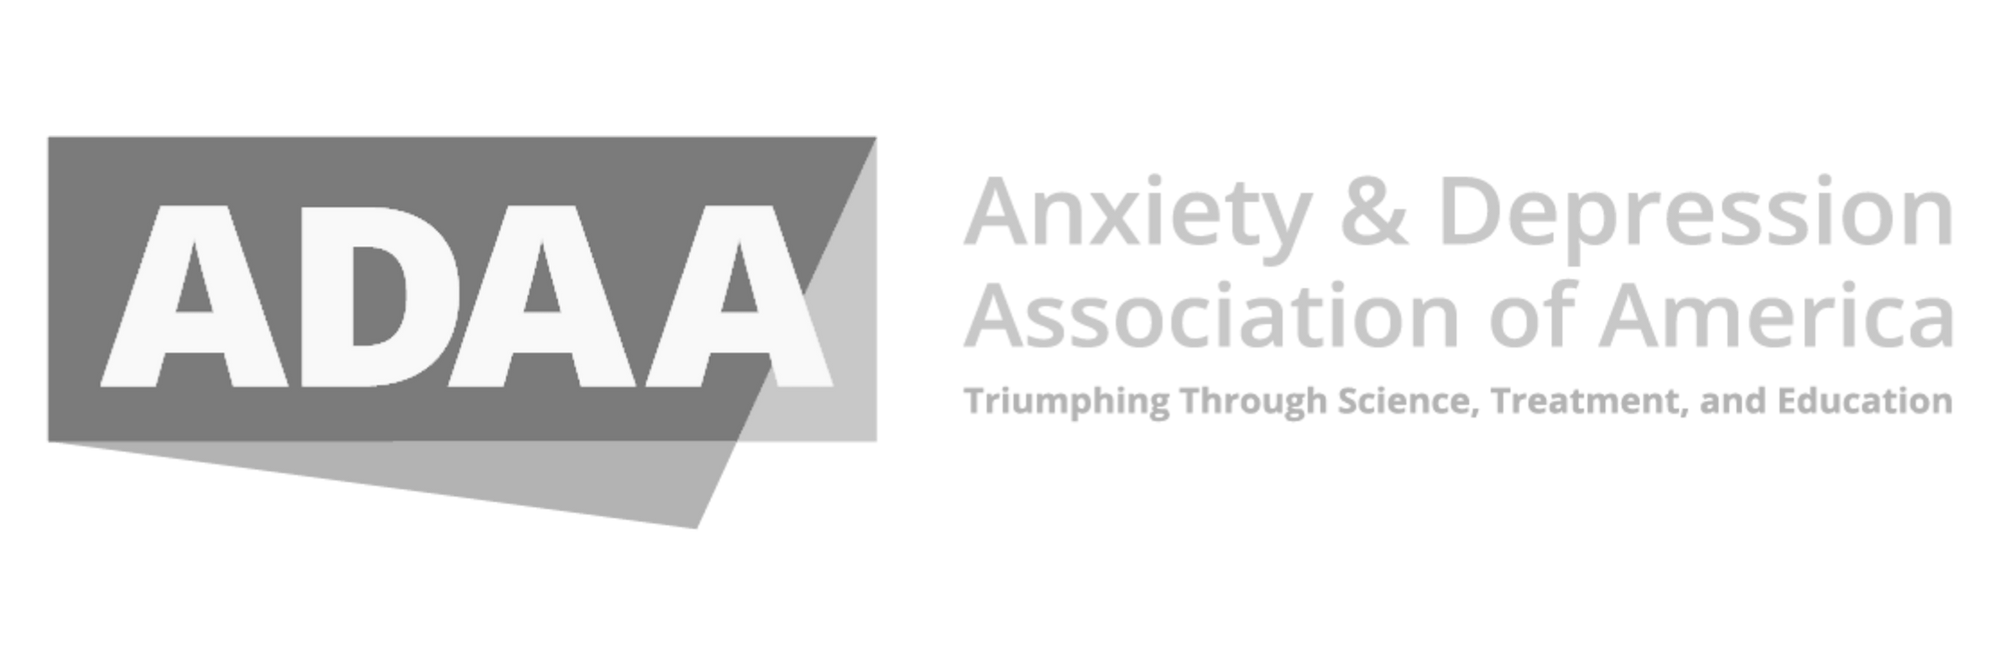 Anxiety & Depression Association of America Logo